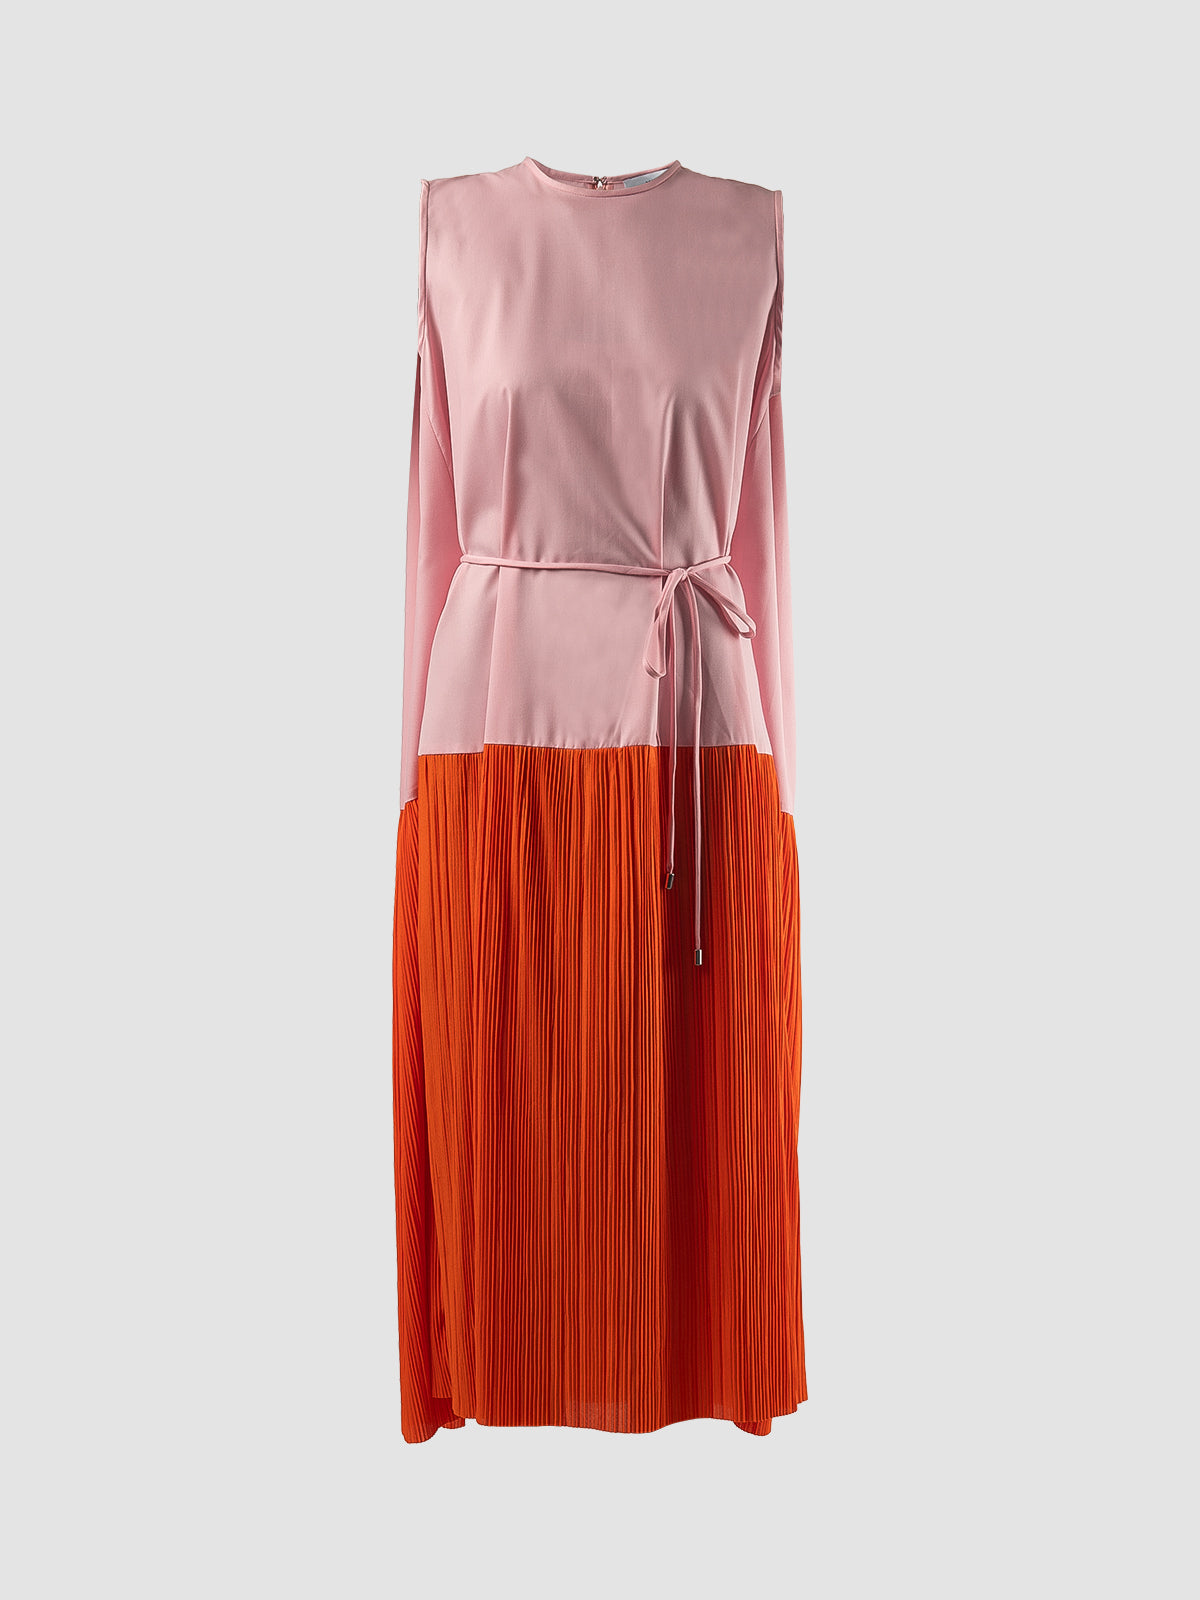 Rose pink-orange Haddock pleat dress